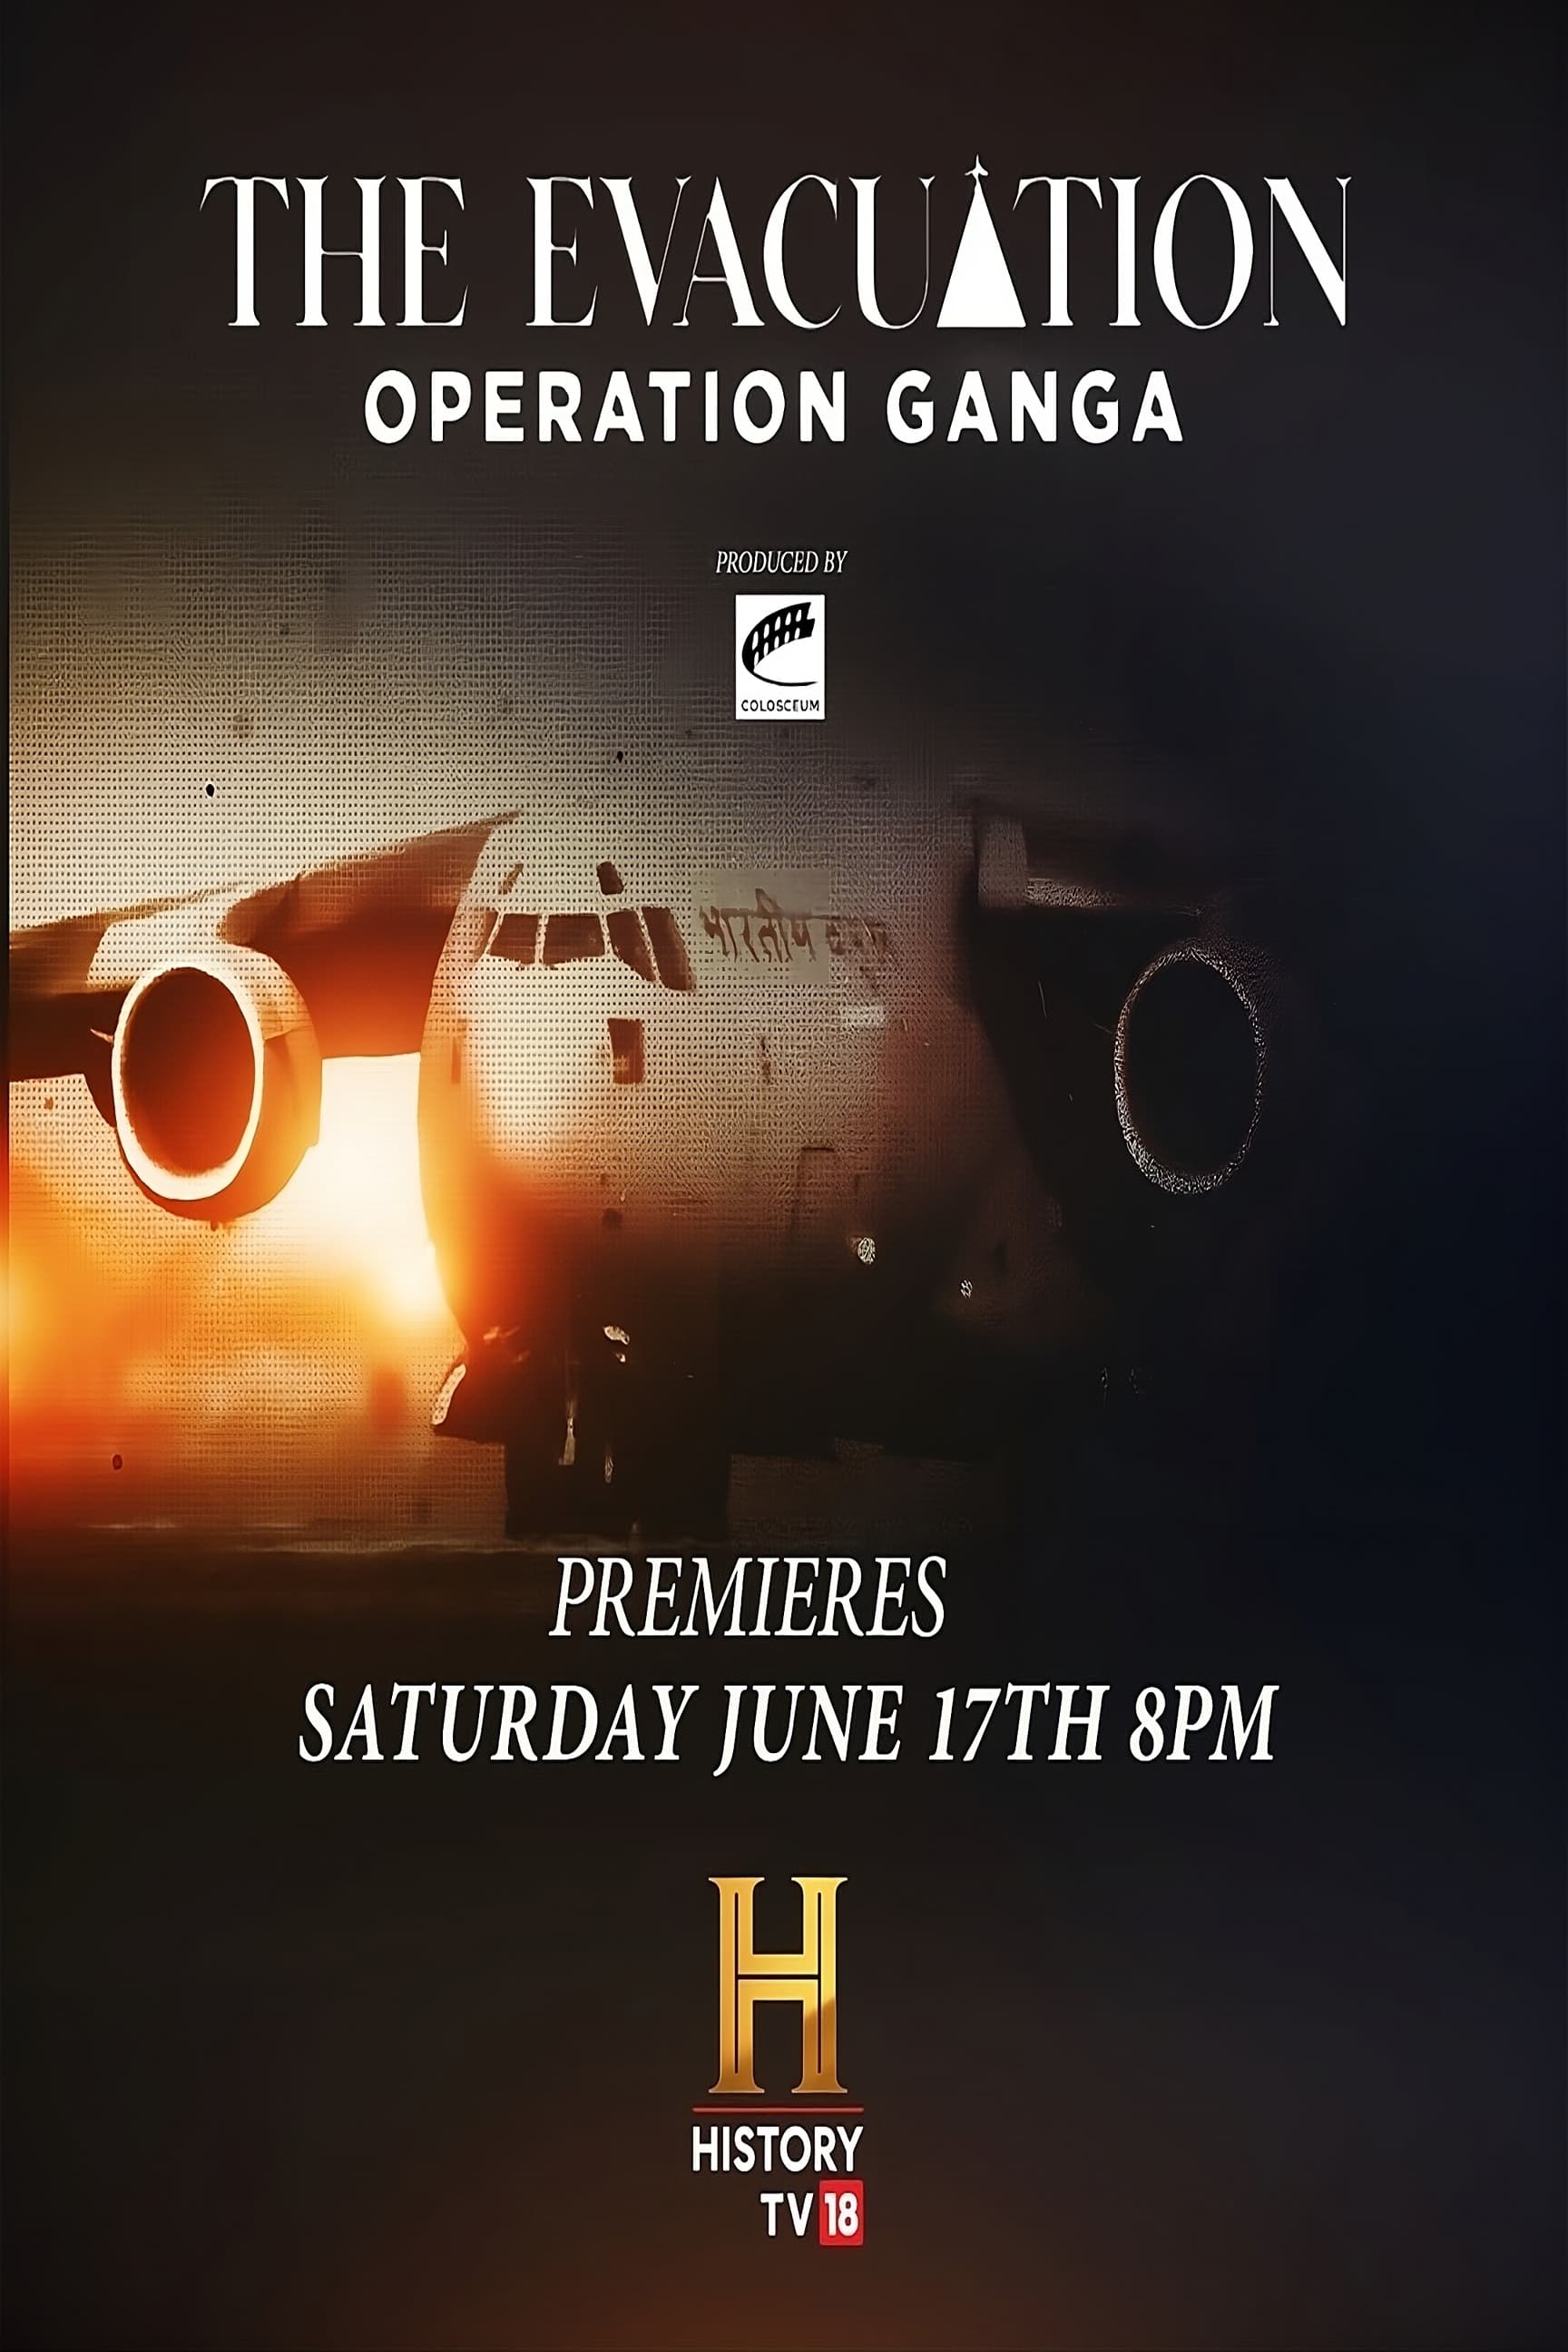 The Evacuation: Operation Ganga